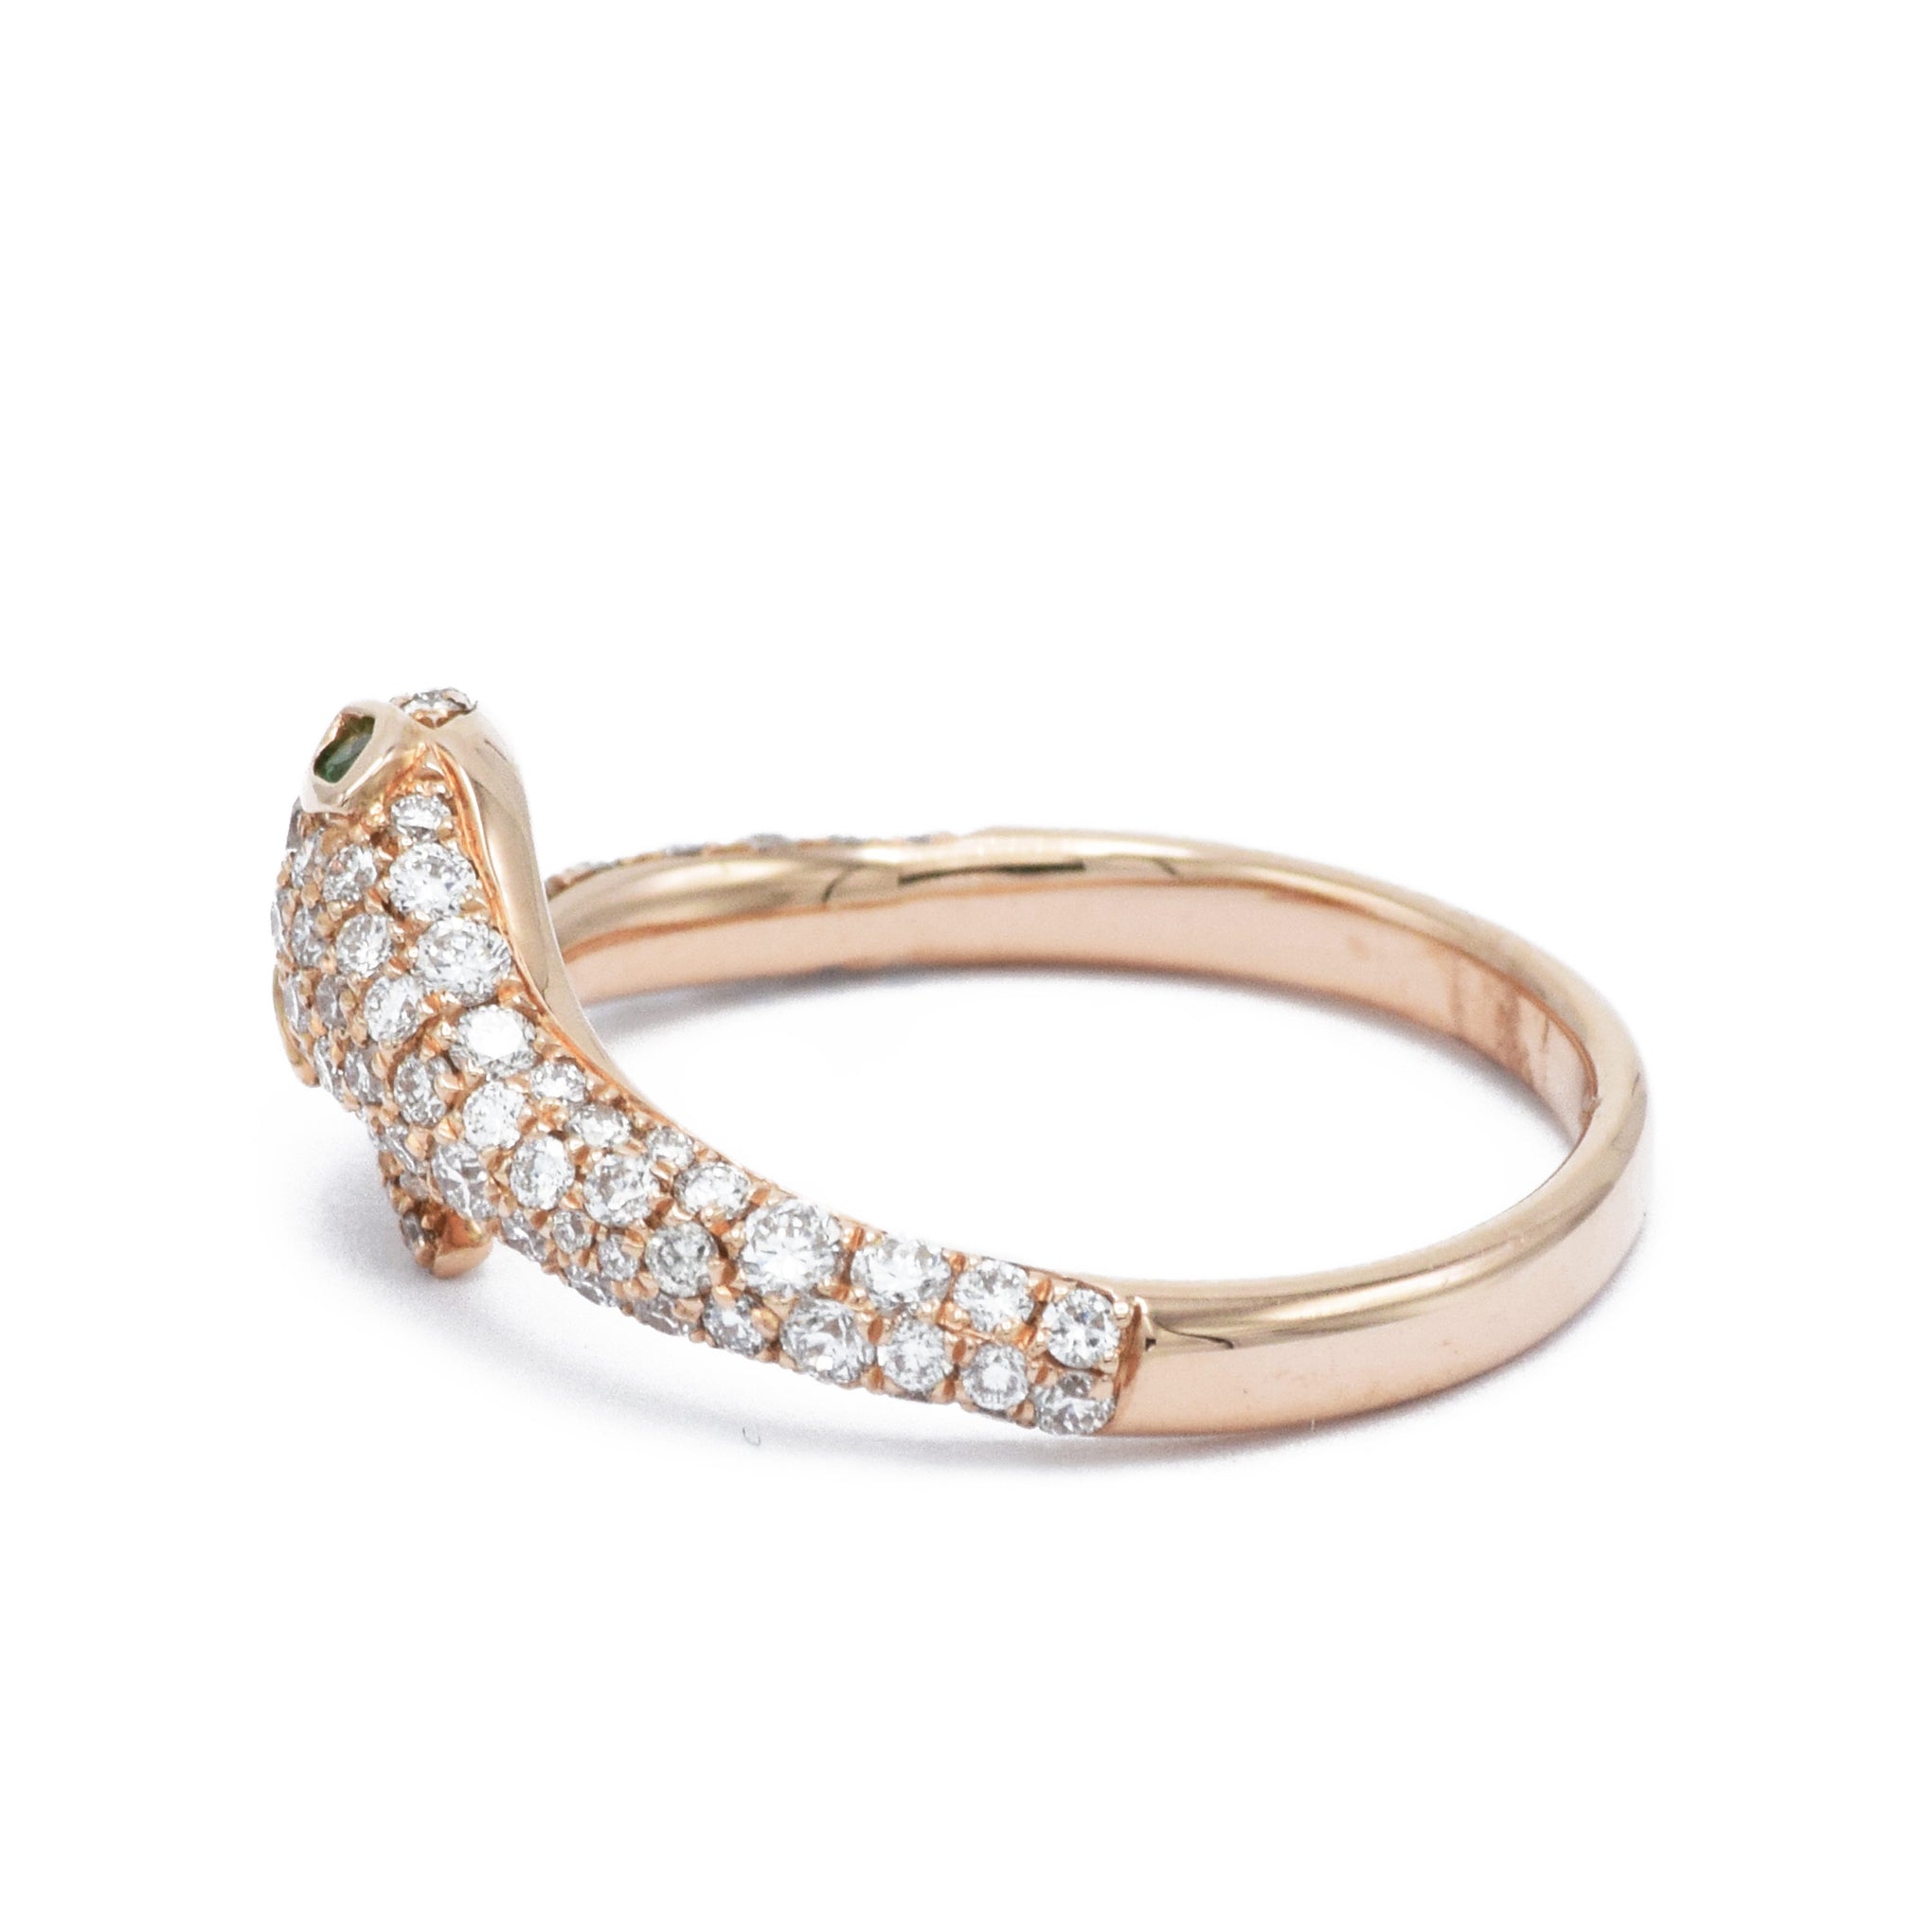 Rose Gold Diamond Snake Ring With Emerald Eyes